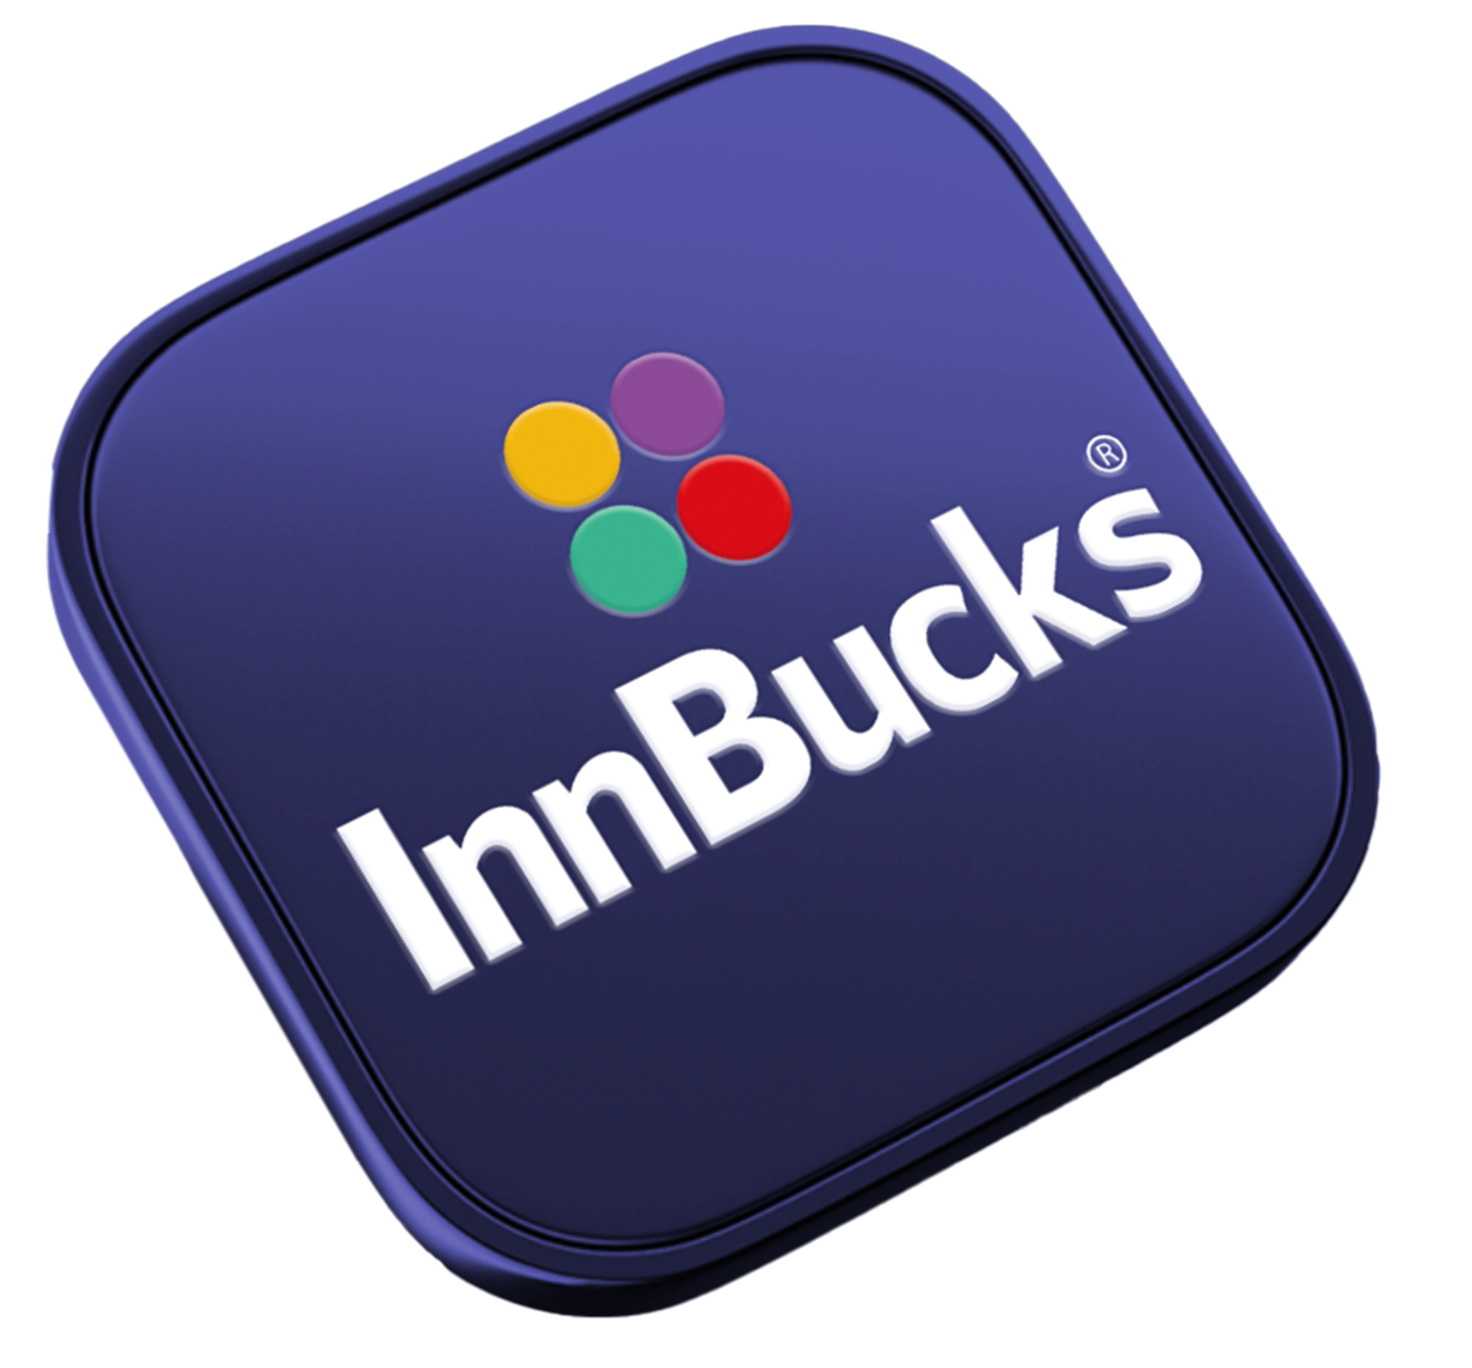 InnBucks pours US$5 million into operations